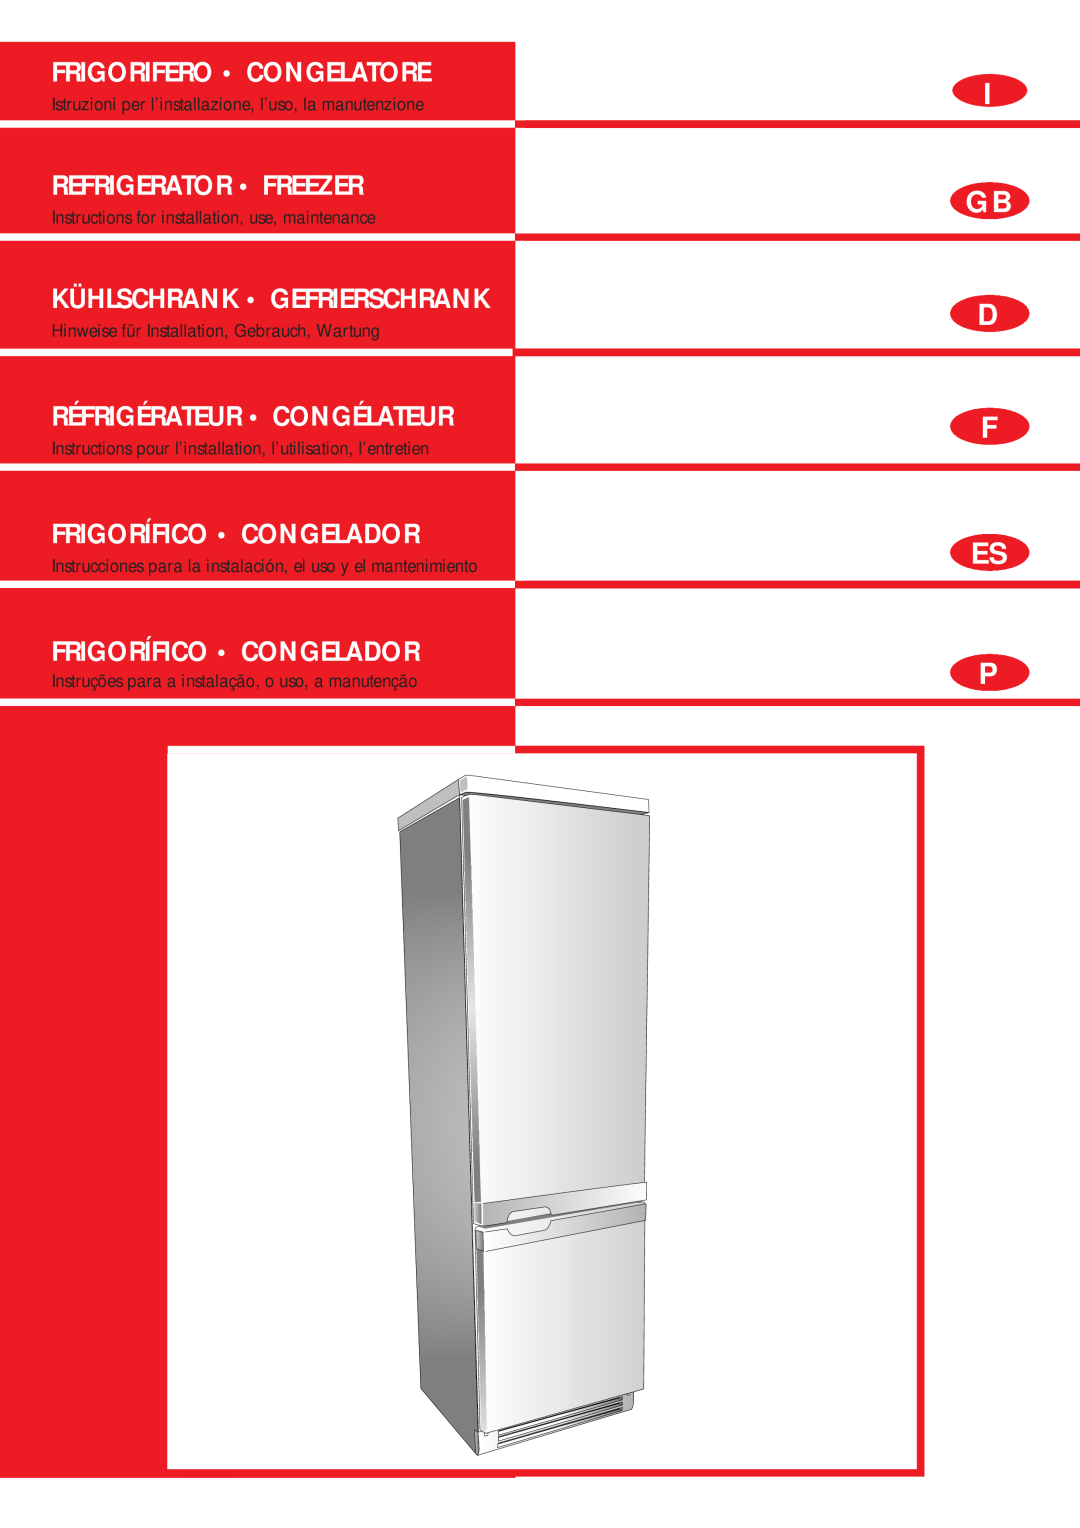 Smeg CW350RX manual I Gb D F Es P, Frigorifero Congelatore, Refrigerator Freezer, Kühlschrank Gefrierschrank 